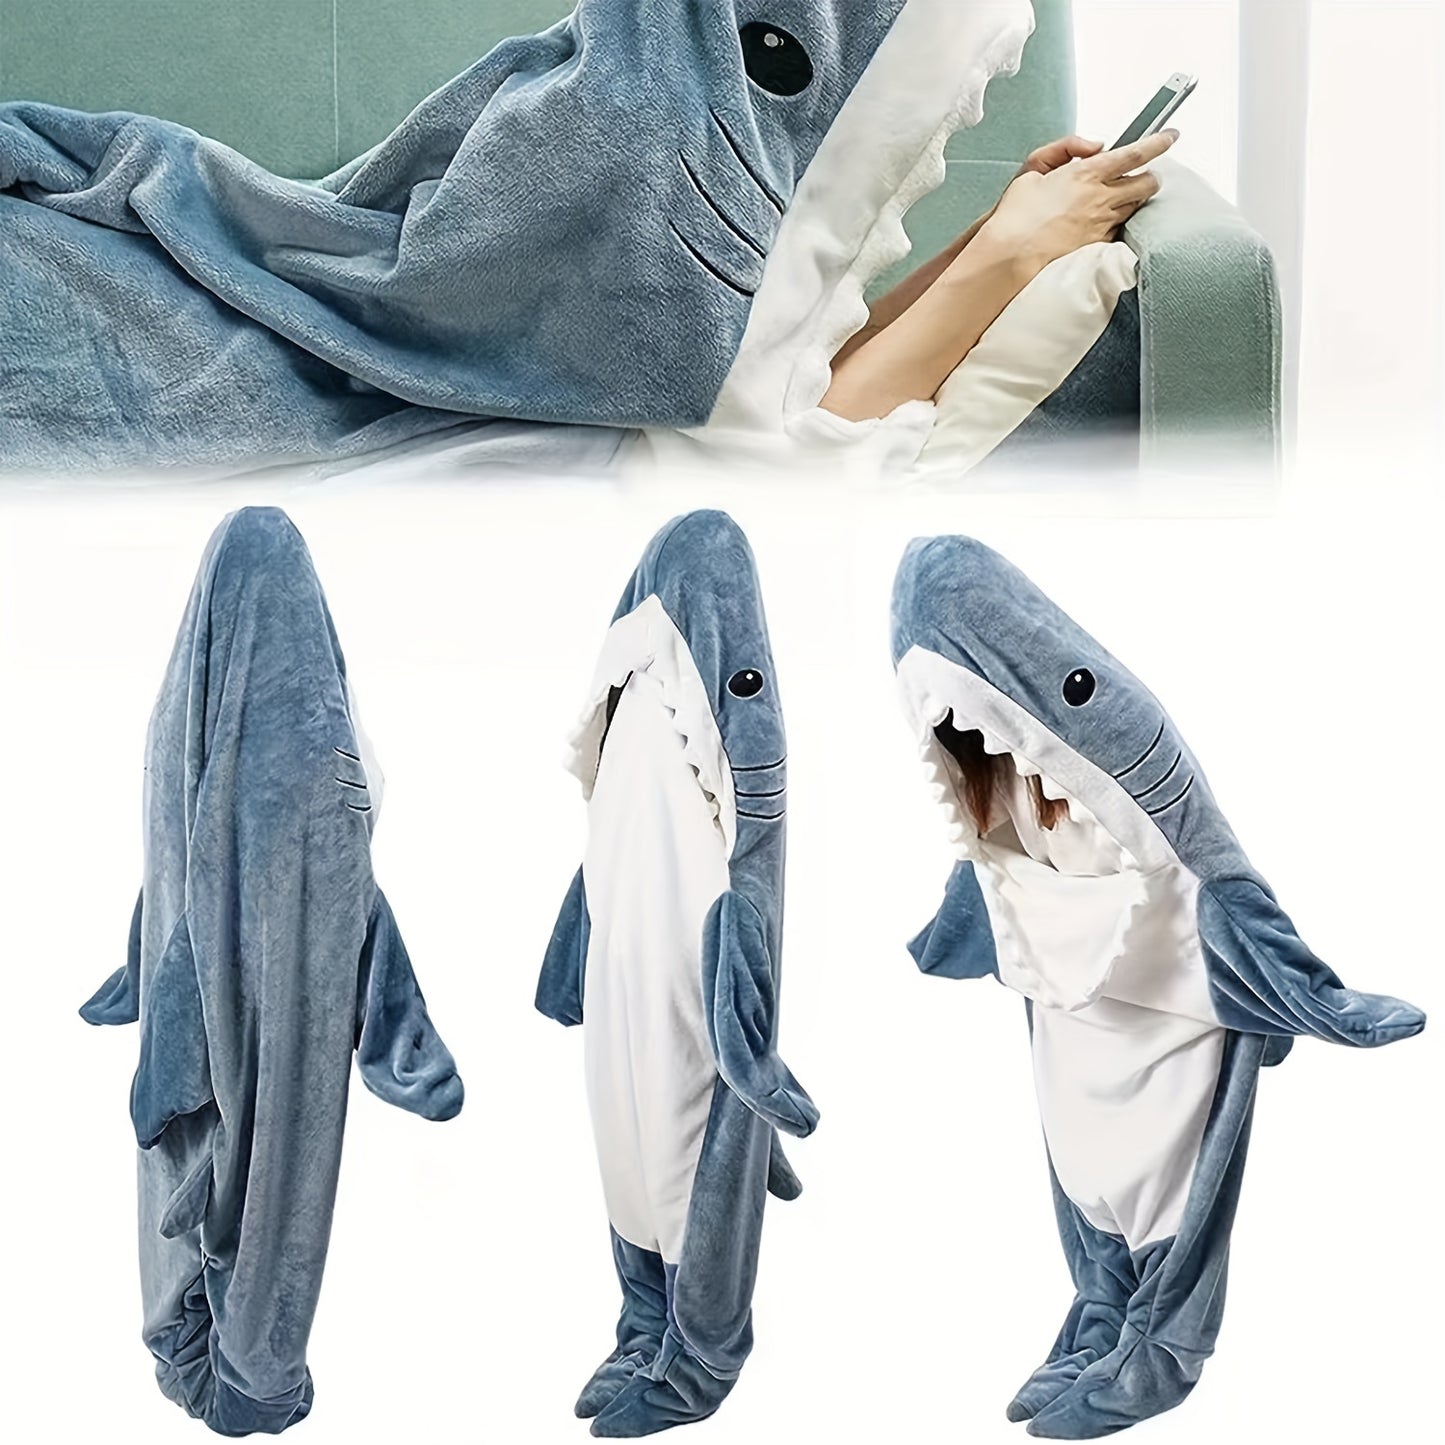 Shark Onesie Blanket For Adults, Shark Blanket Hoodie, Shark Blanket Super Soft Cozy Flannel, Boys Girls Cosplay Costume Sleeping Bag For Night